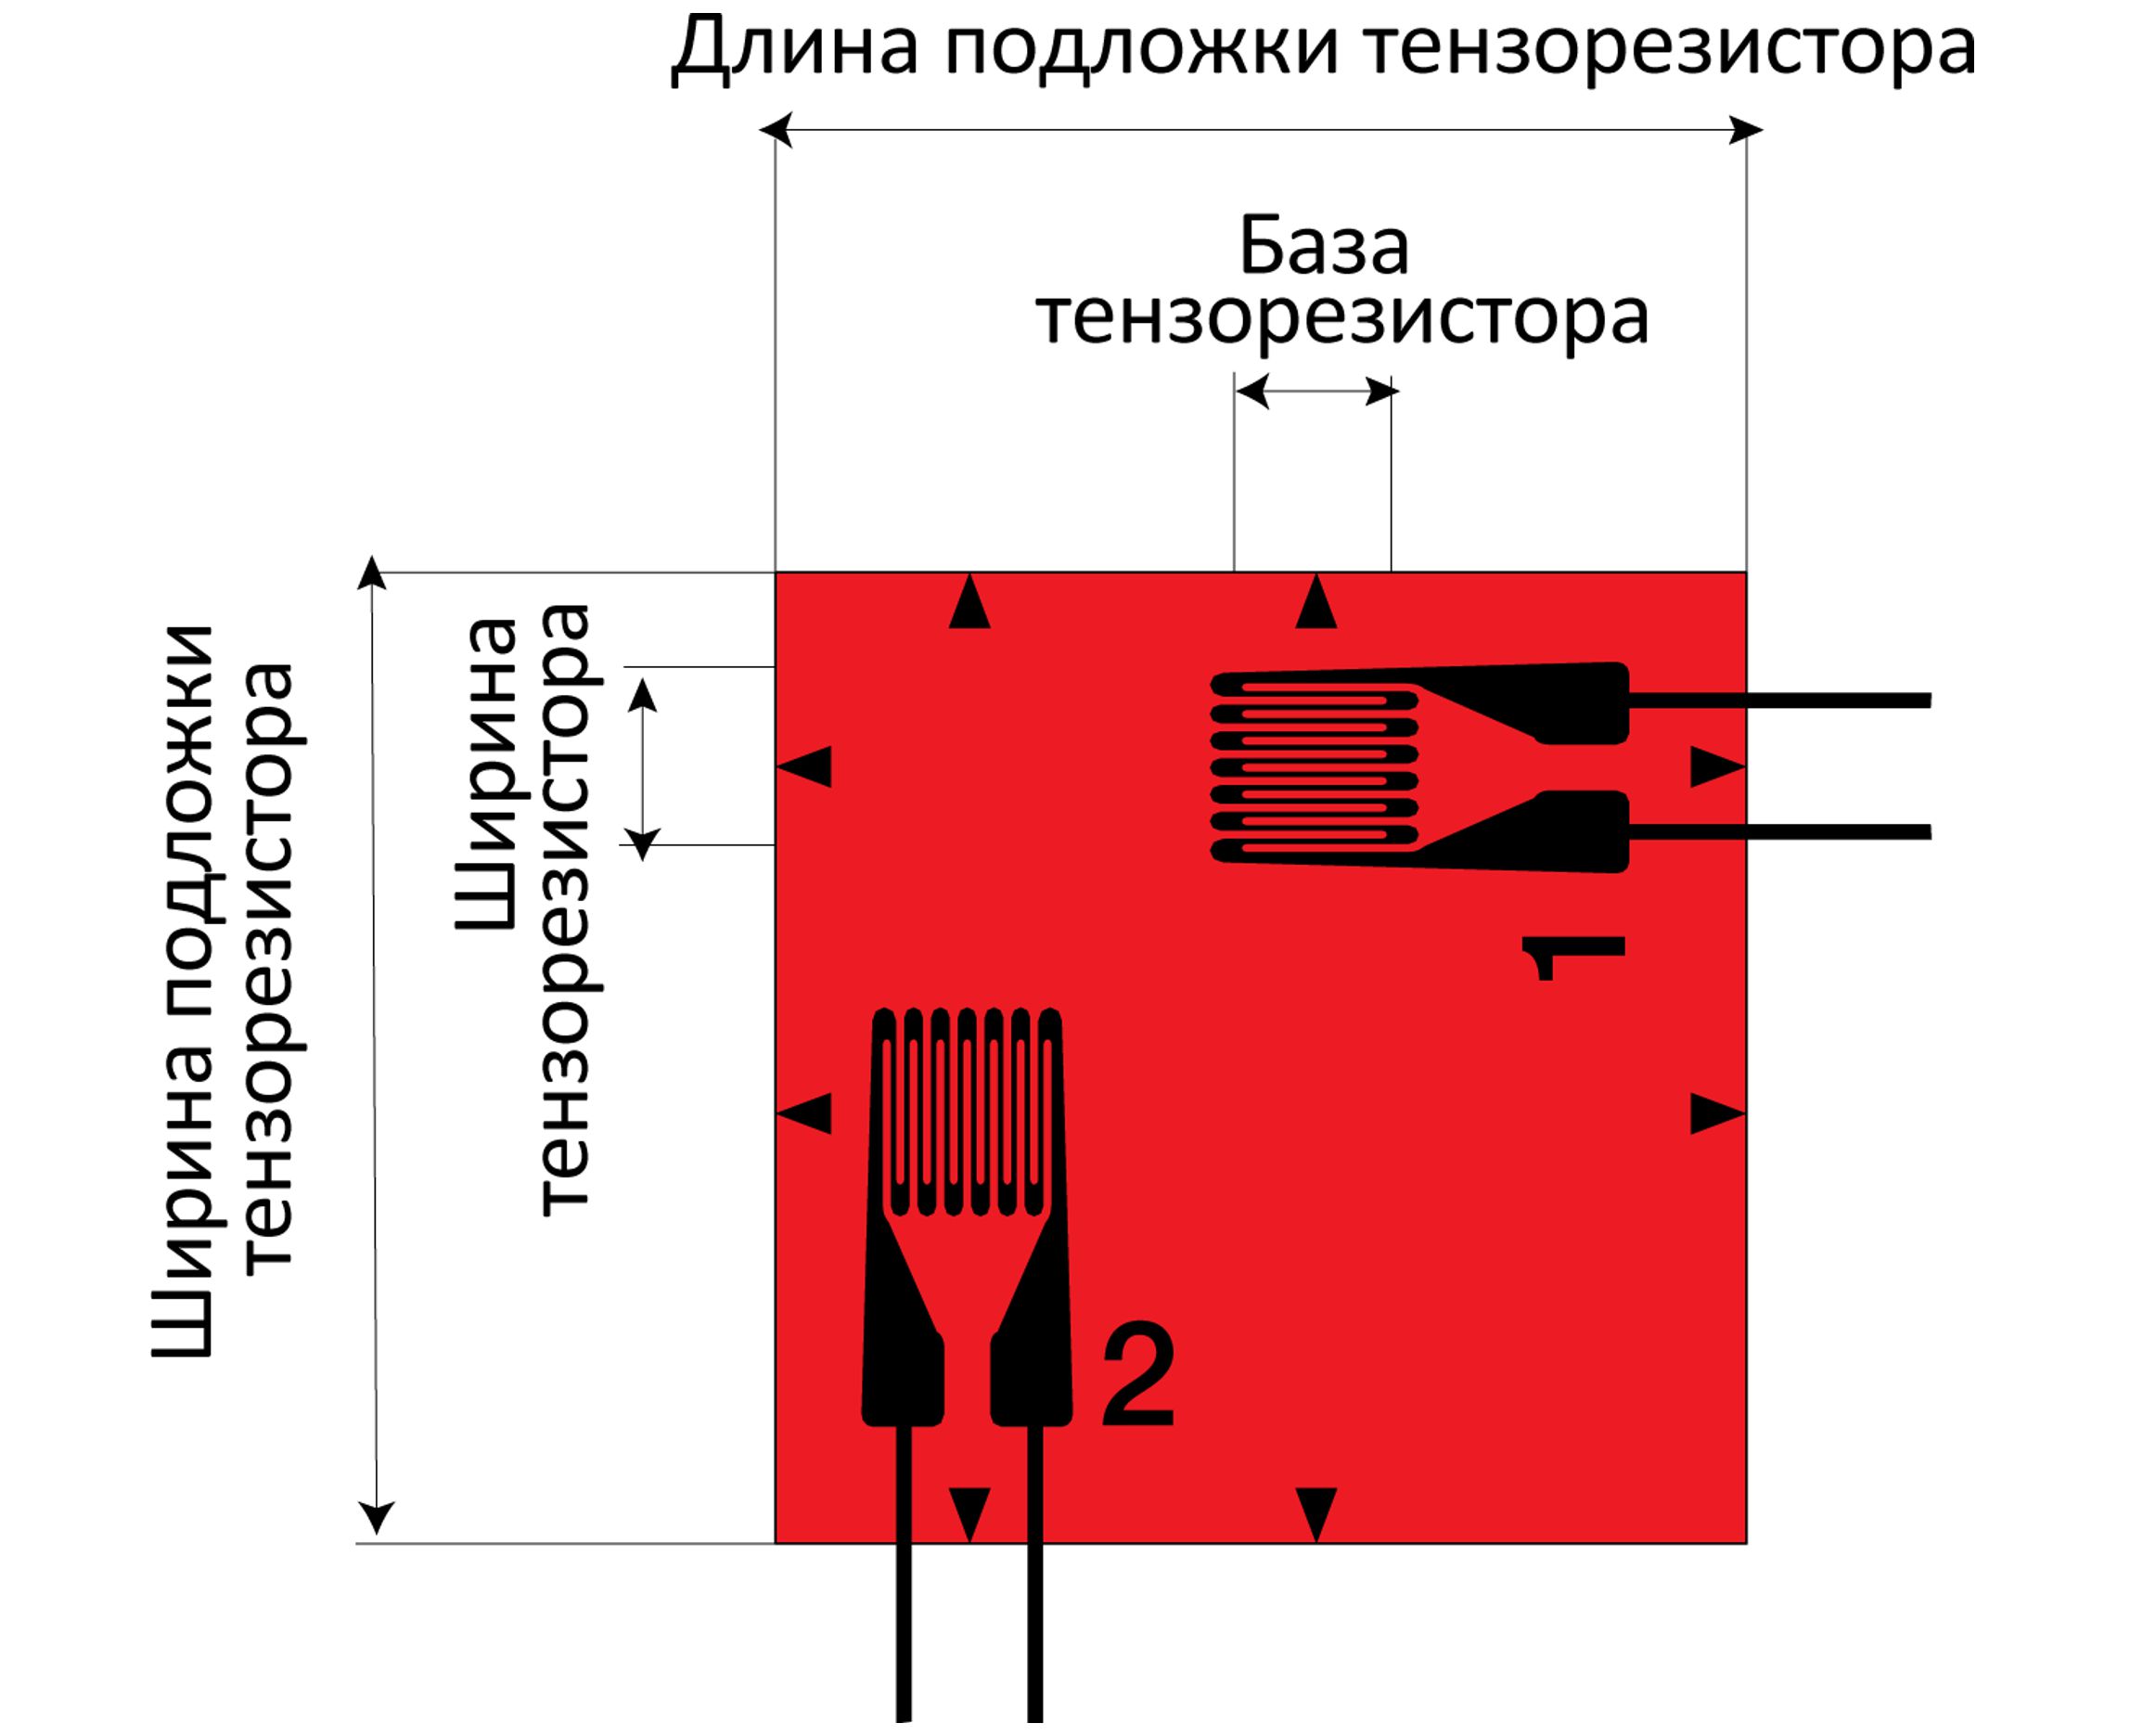 Тензорезисторы CFCA 2 элемента розетка крио температуры